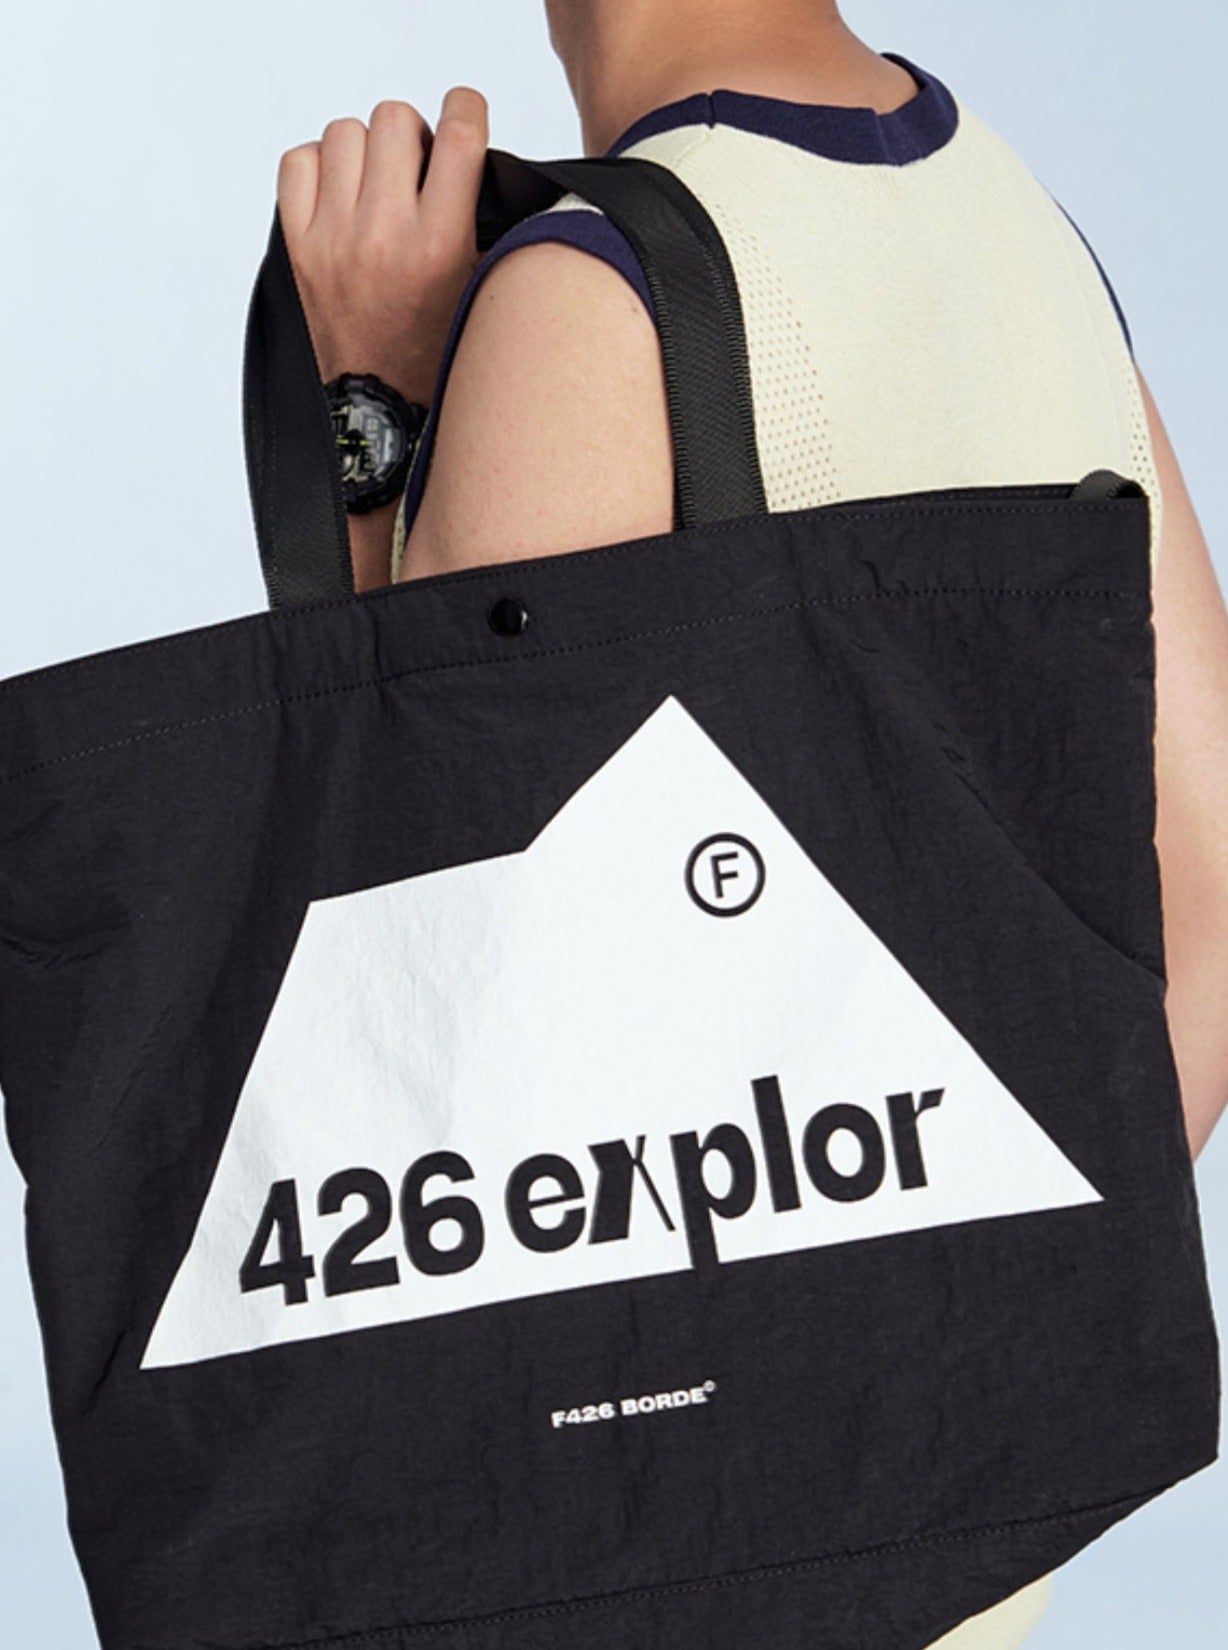 Outdoor Handbag with Geometric Design - chiclara